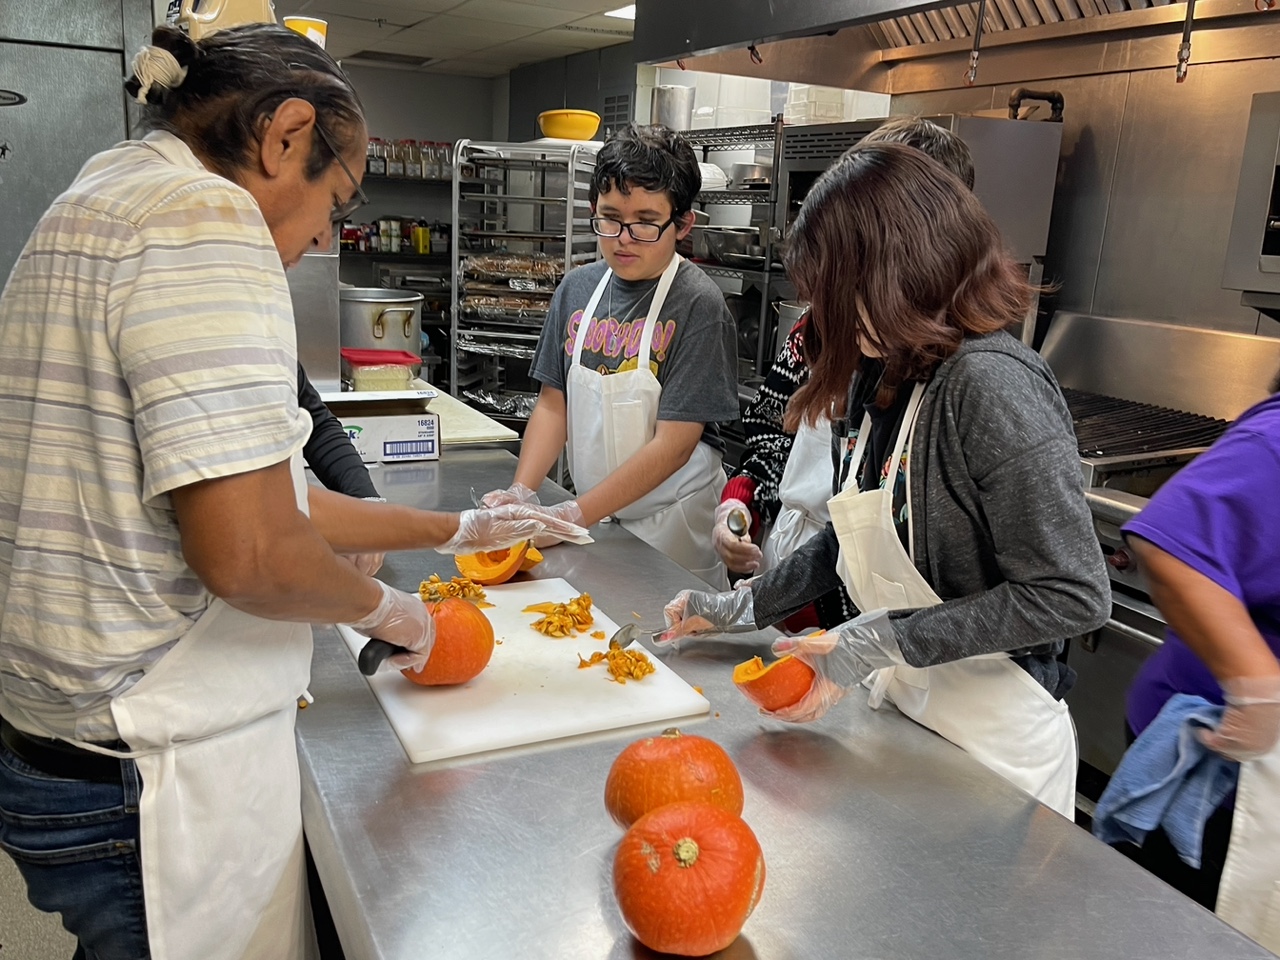 A.I.R.E. hosts the Culinary Arts Education Program